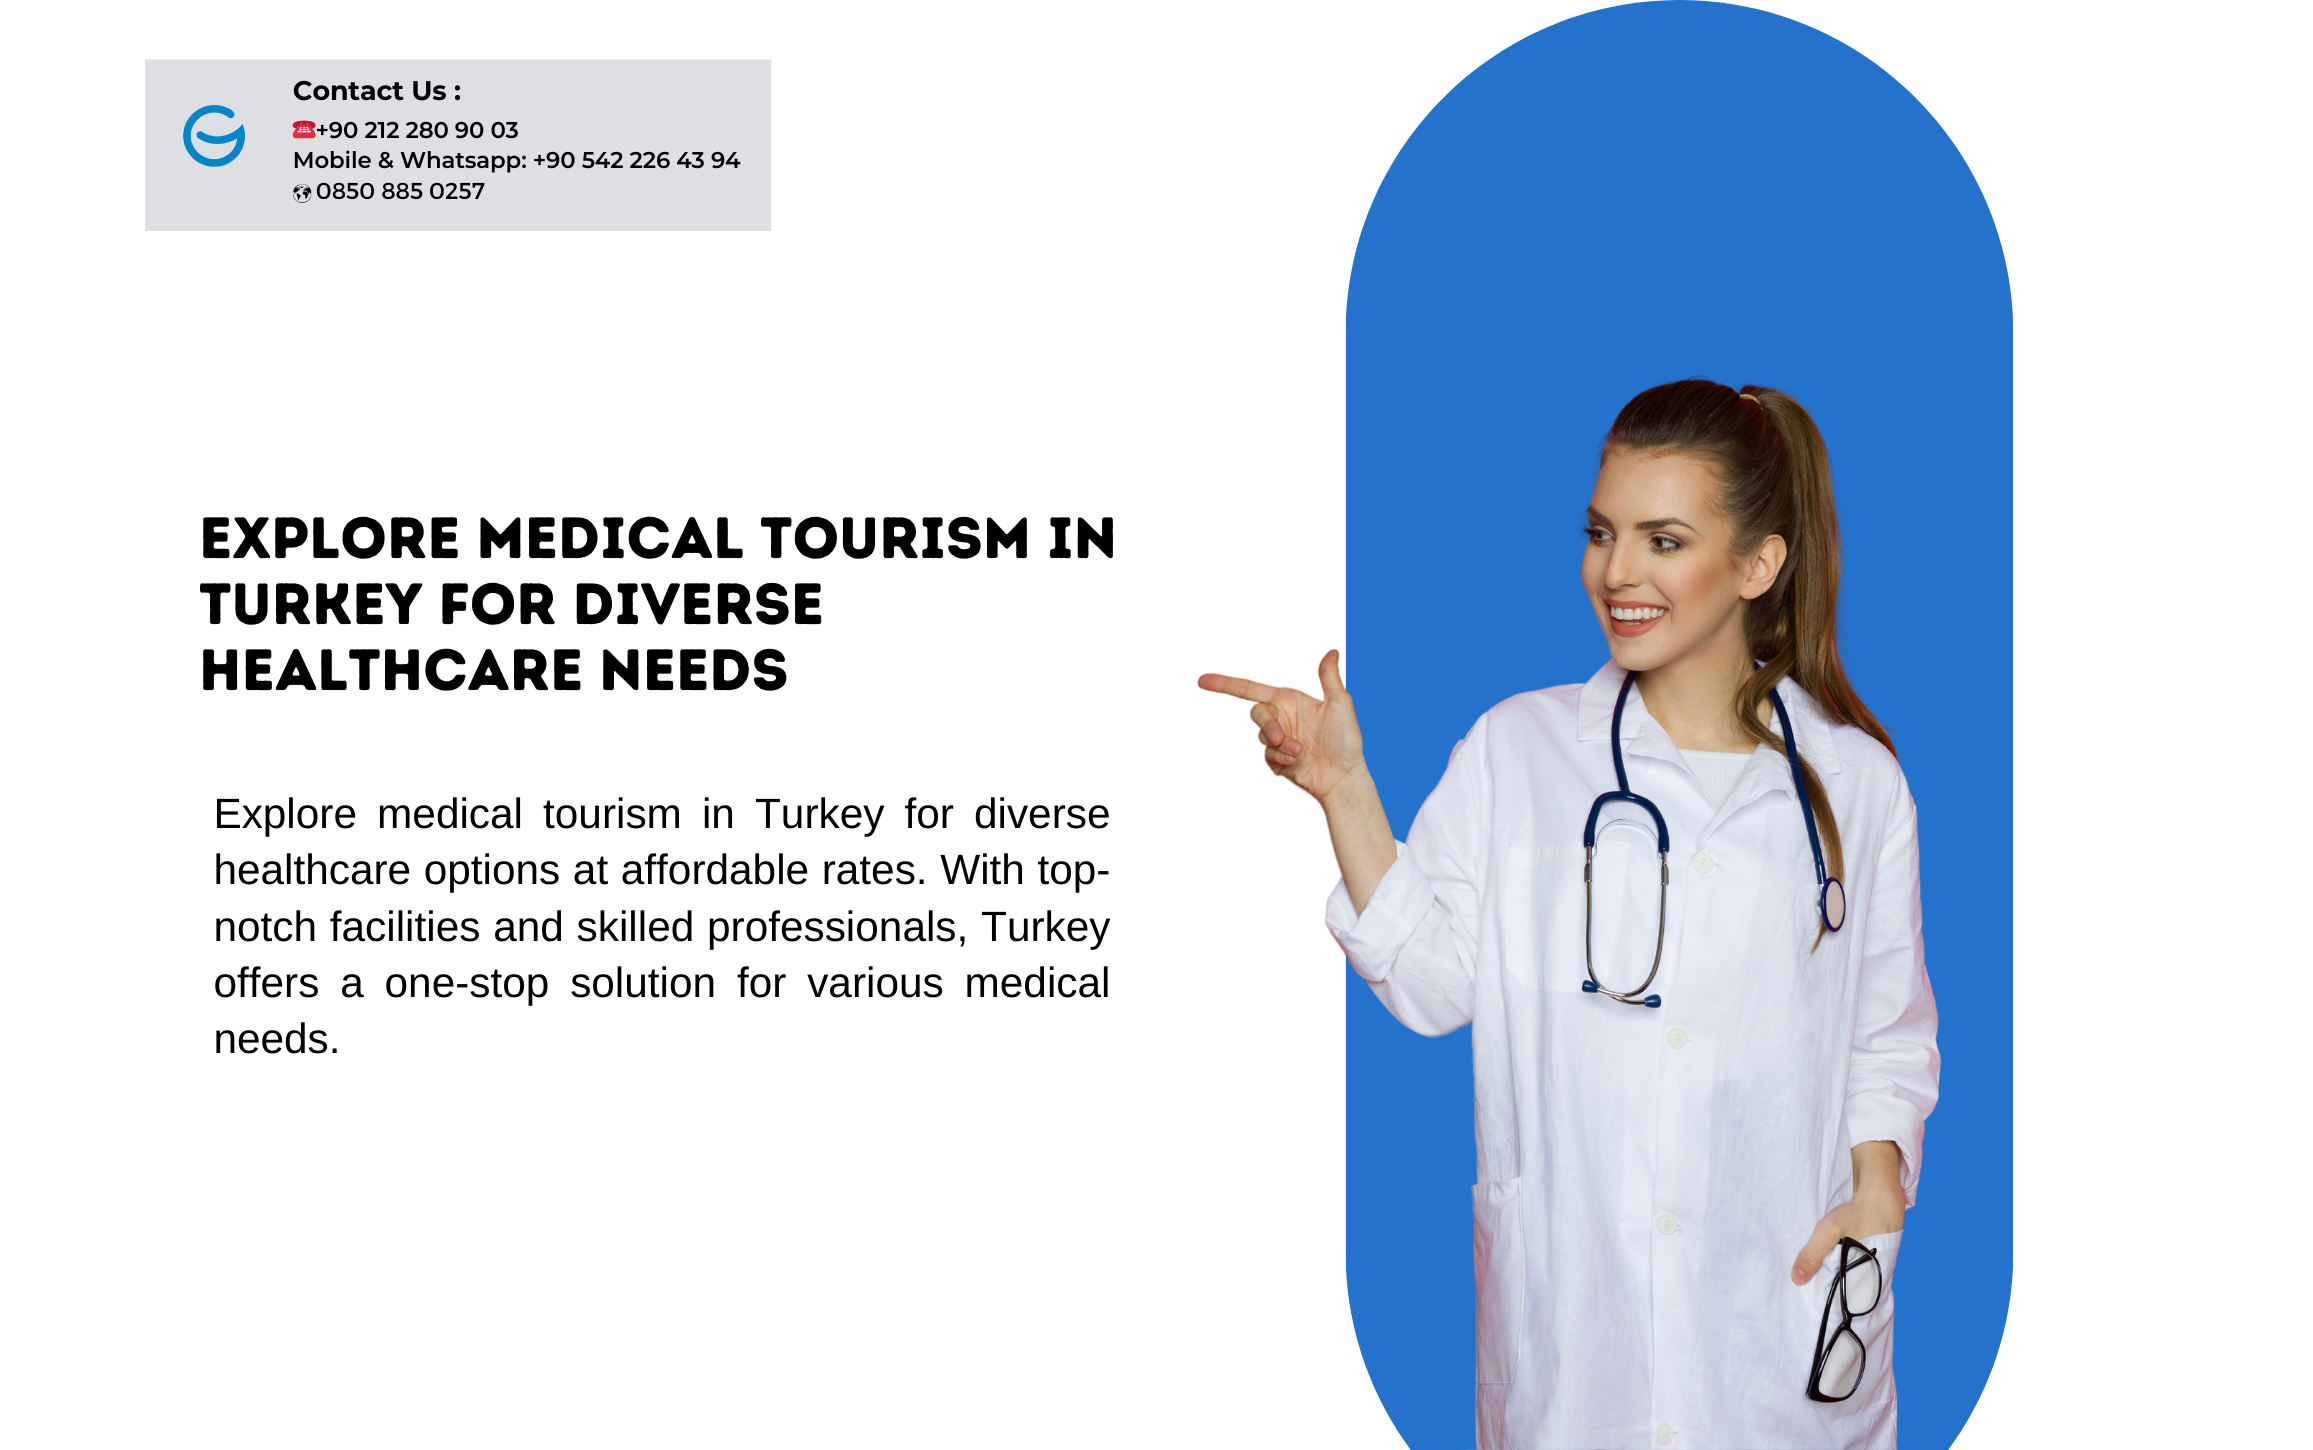 Turismo médico Turquía para diversas necesidades sanitarias